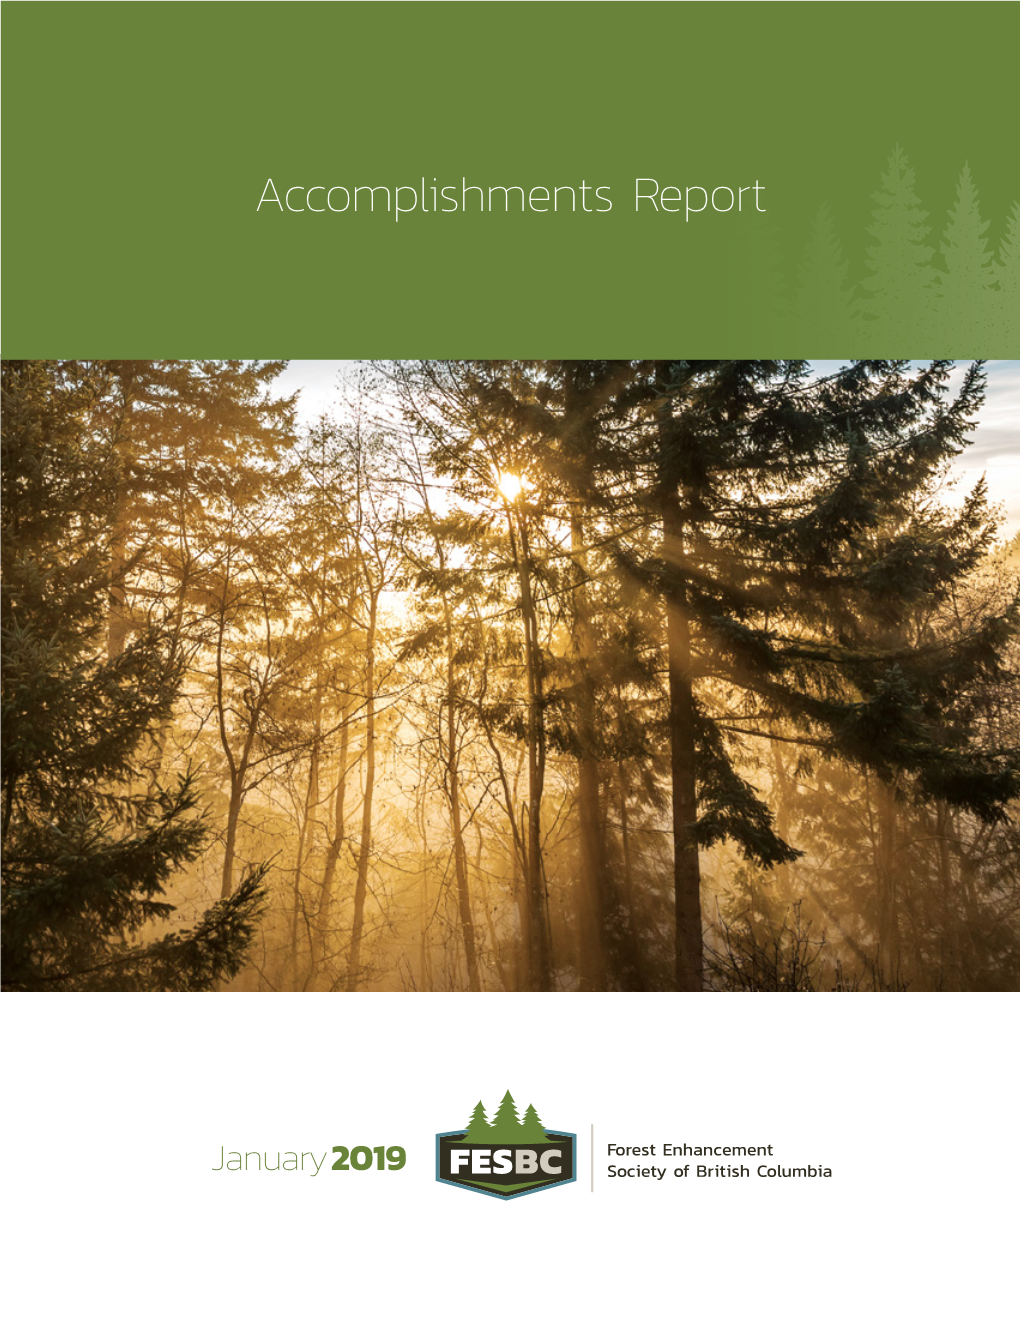 FESBC Accomplishments Report January 2019